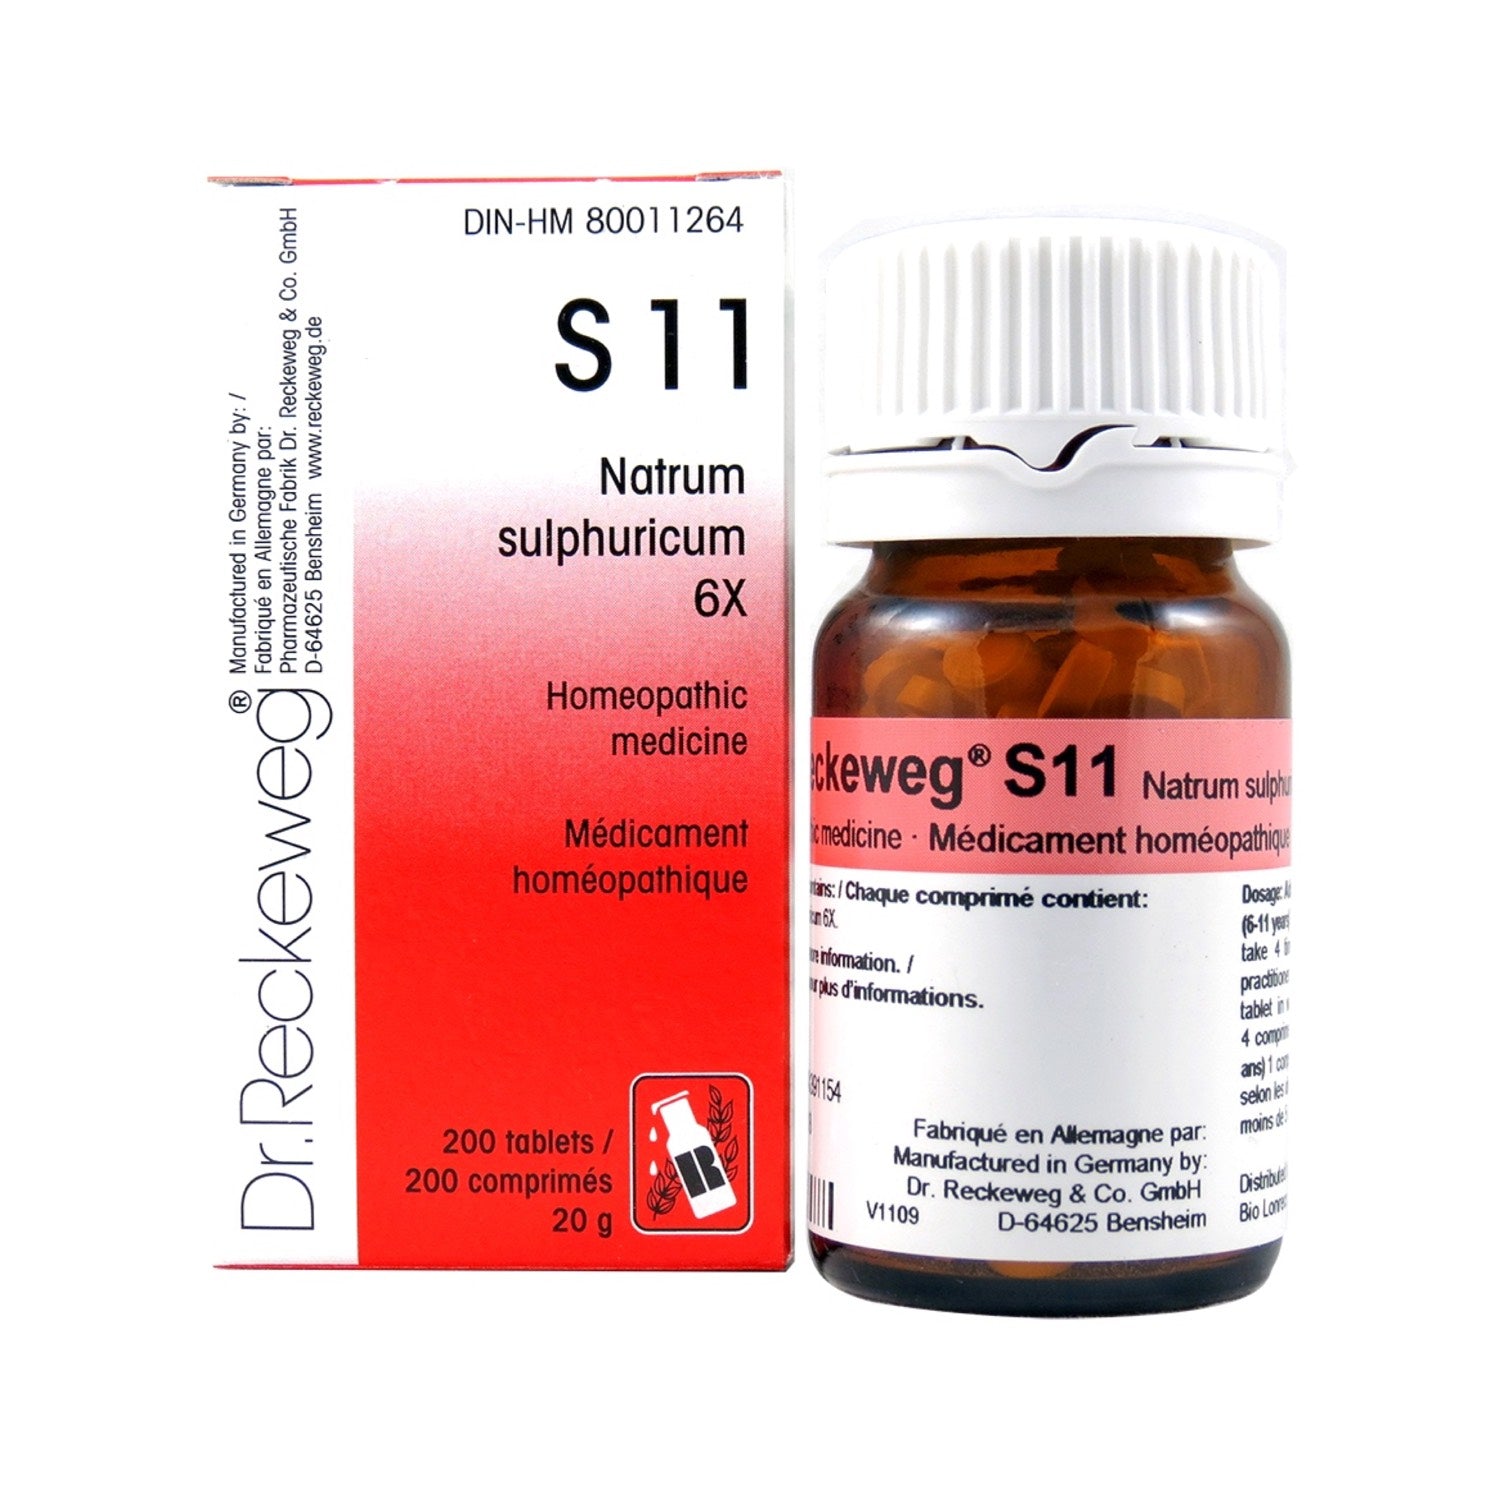 S11 Natrum sulphuricum Homeopathic medicine Schuessler salt  6X 200 tablets (20 g) - iwellnessbox